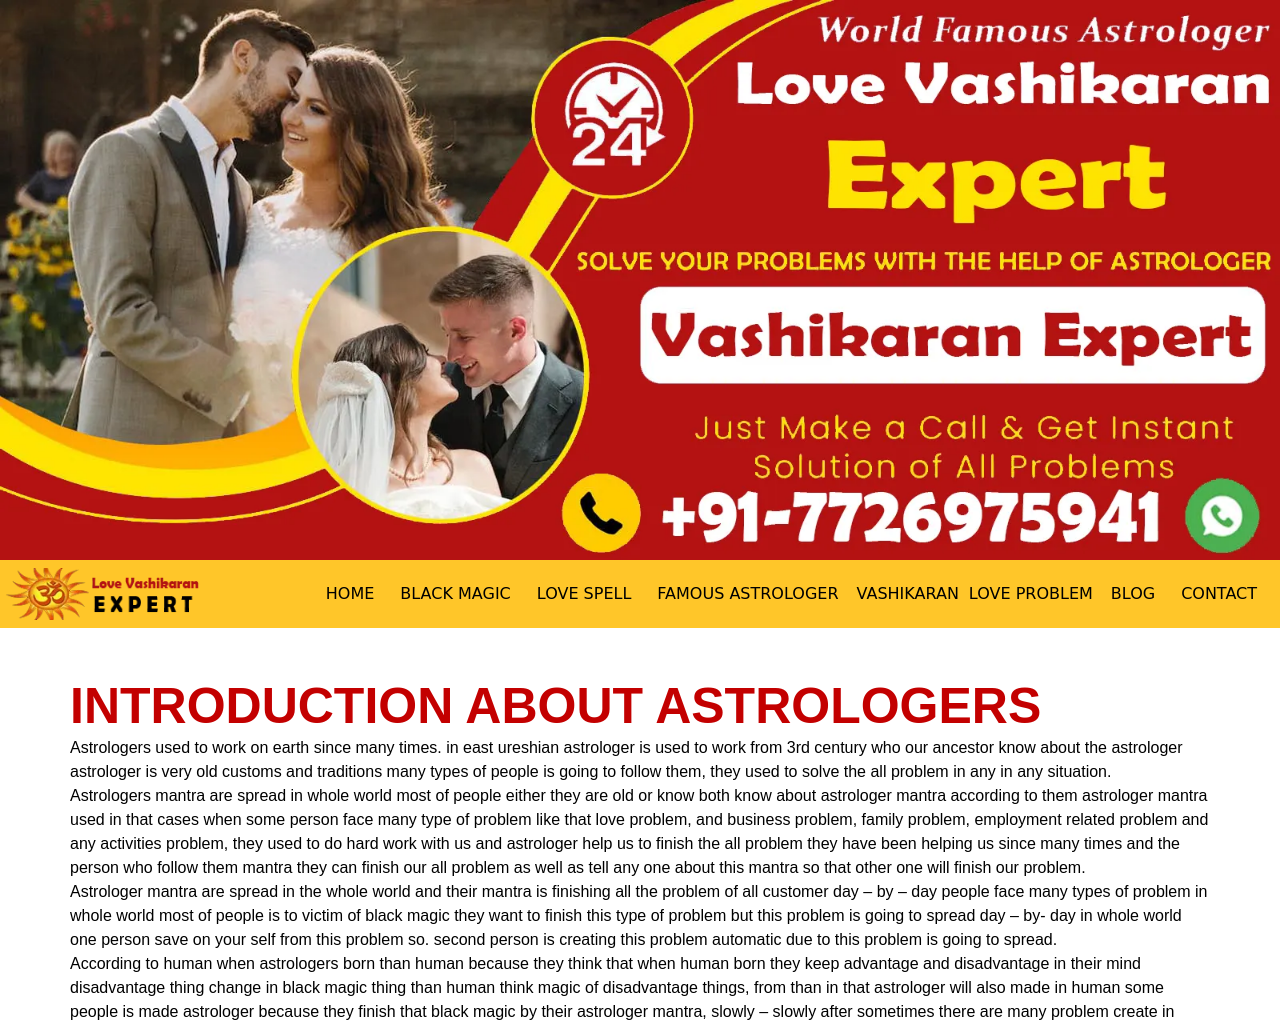 lovevashikaranexpert.in